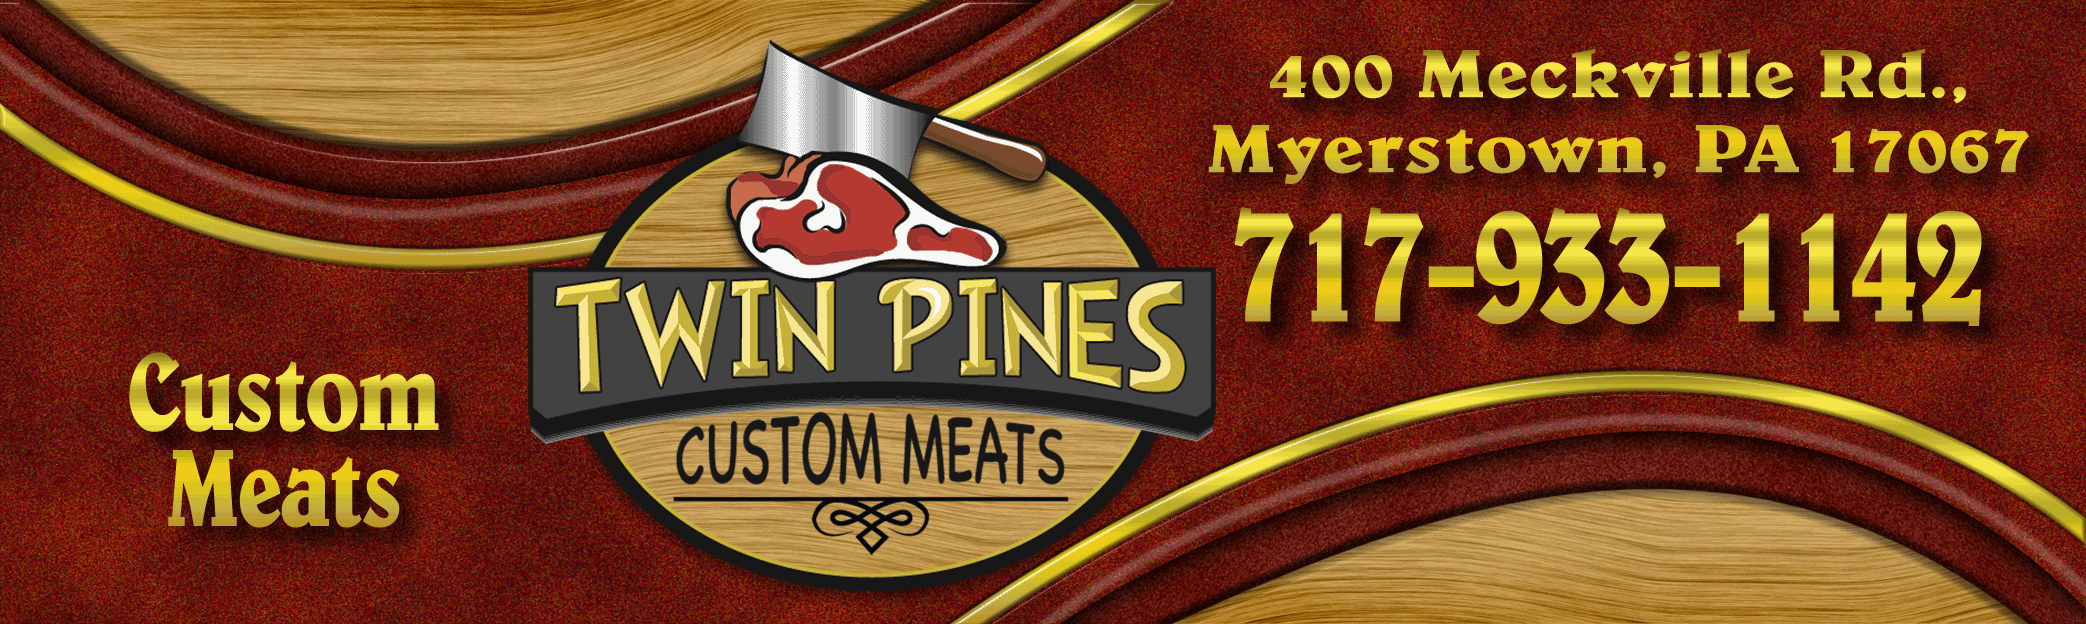 Twin Pines Custom Meats